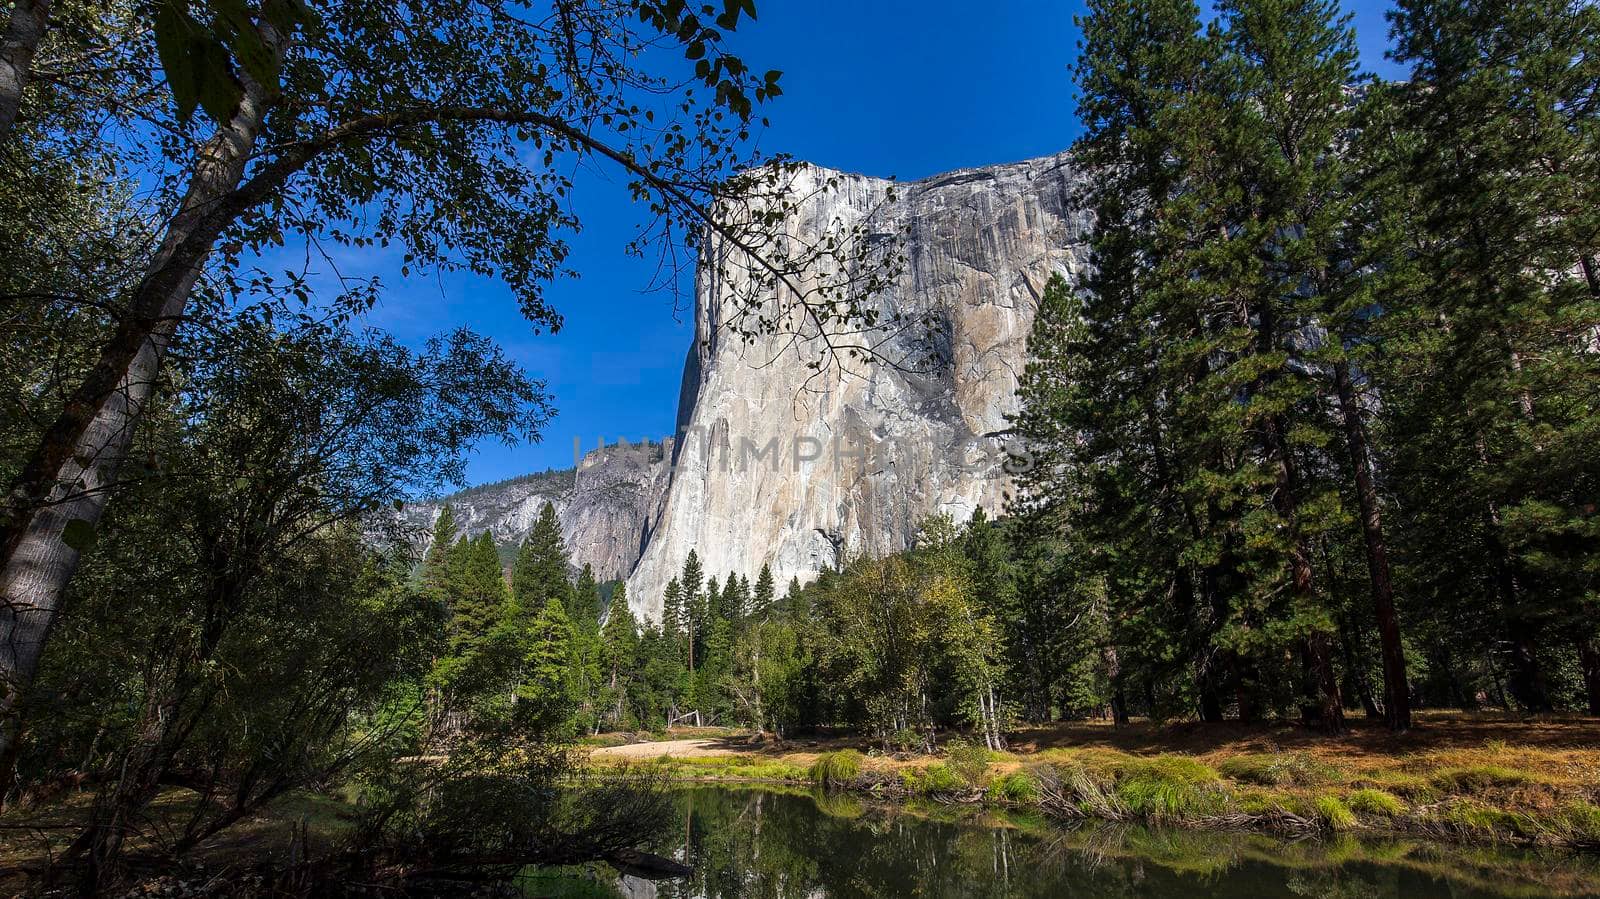 El Capitan, Yosemite national park by photogolfer